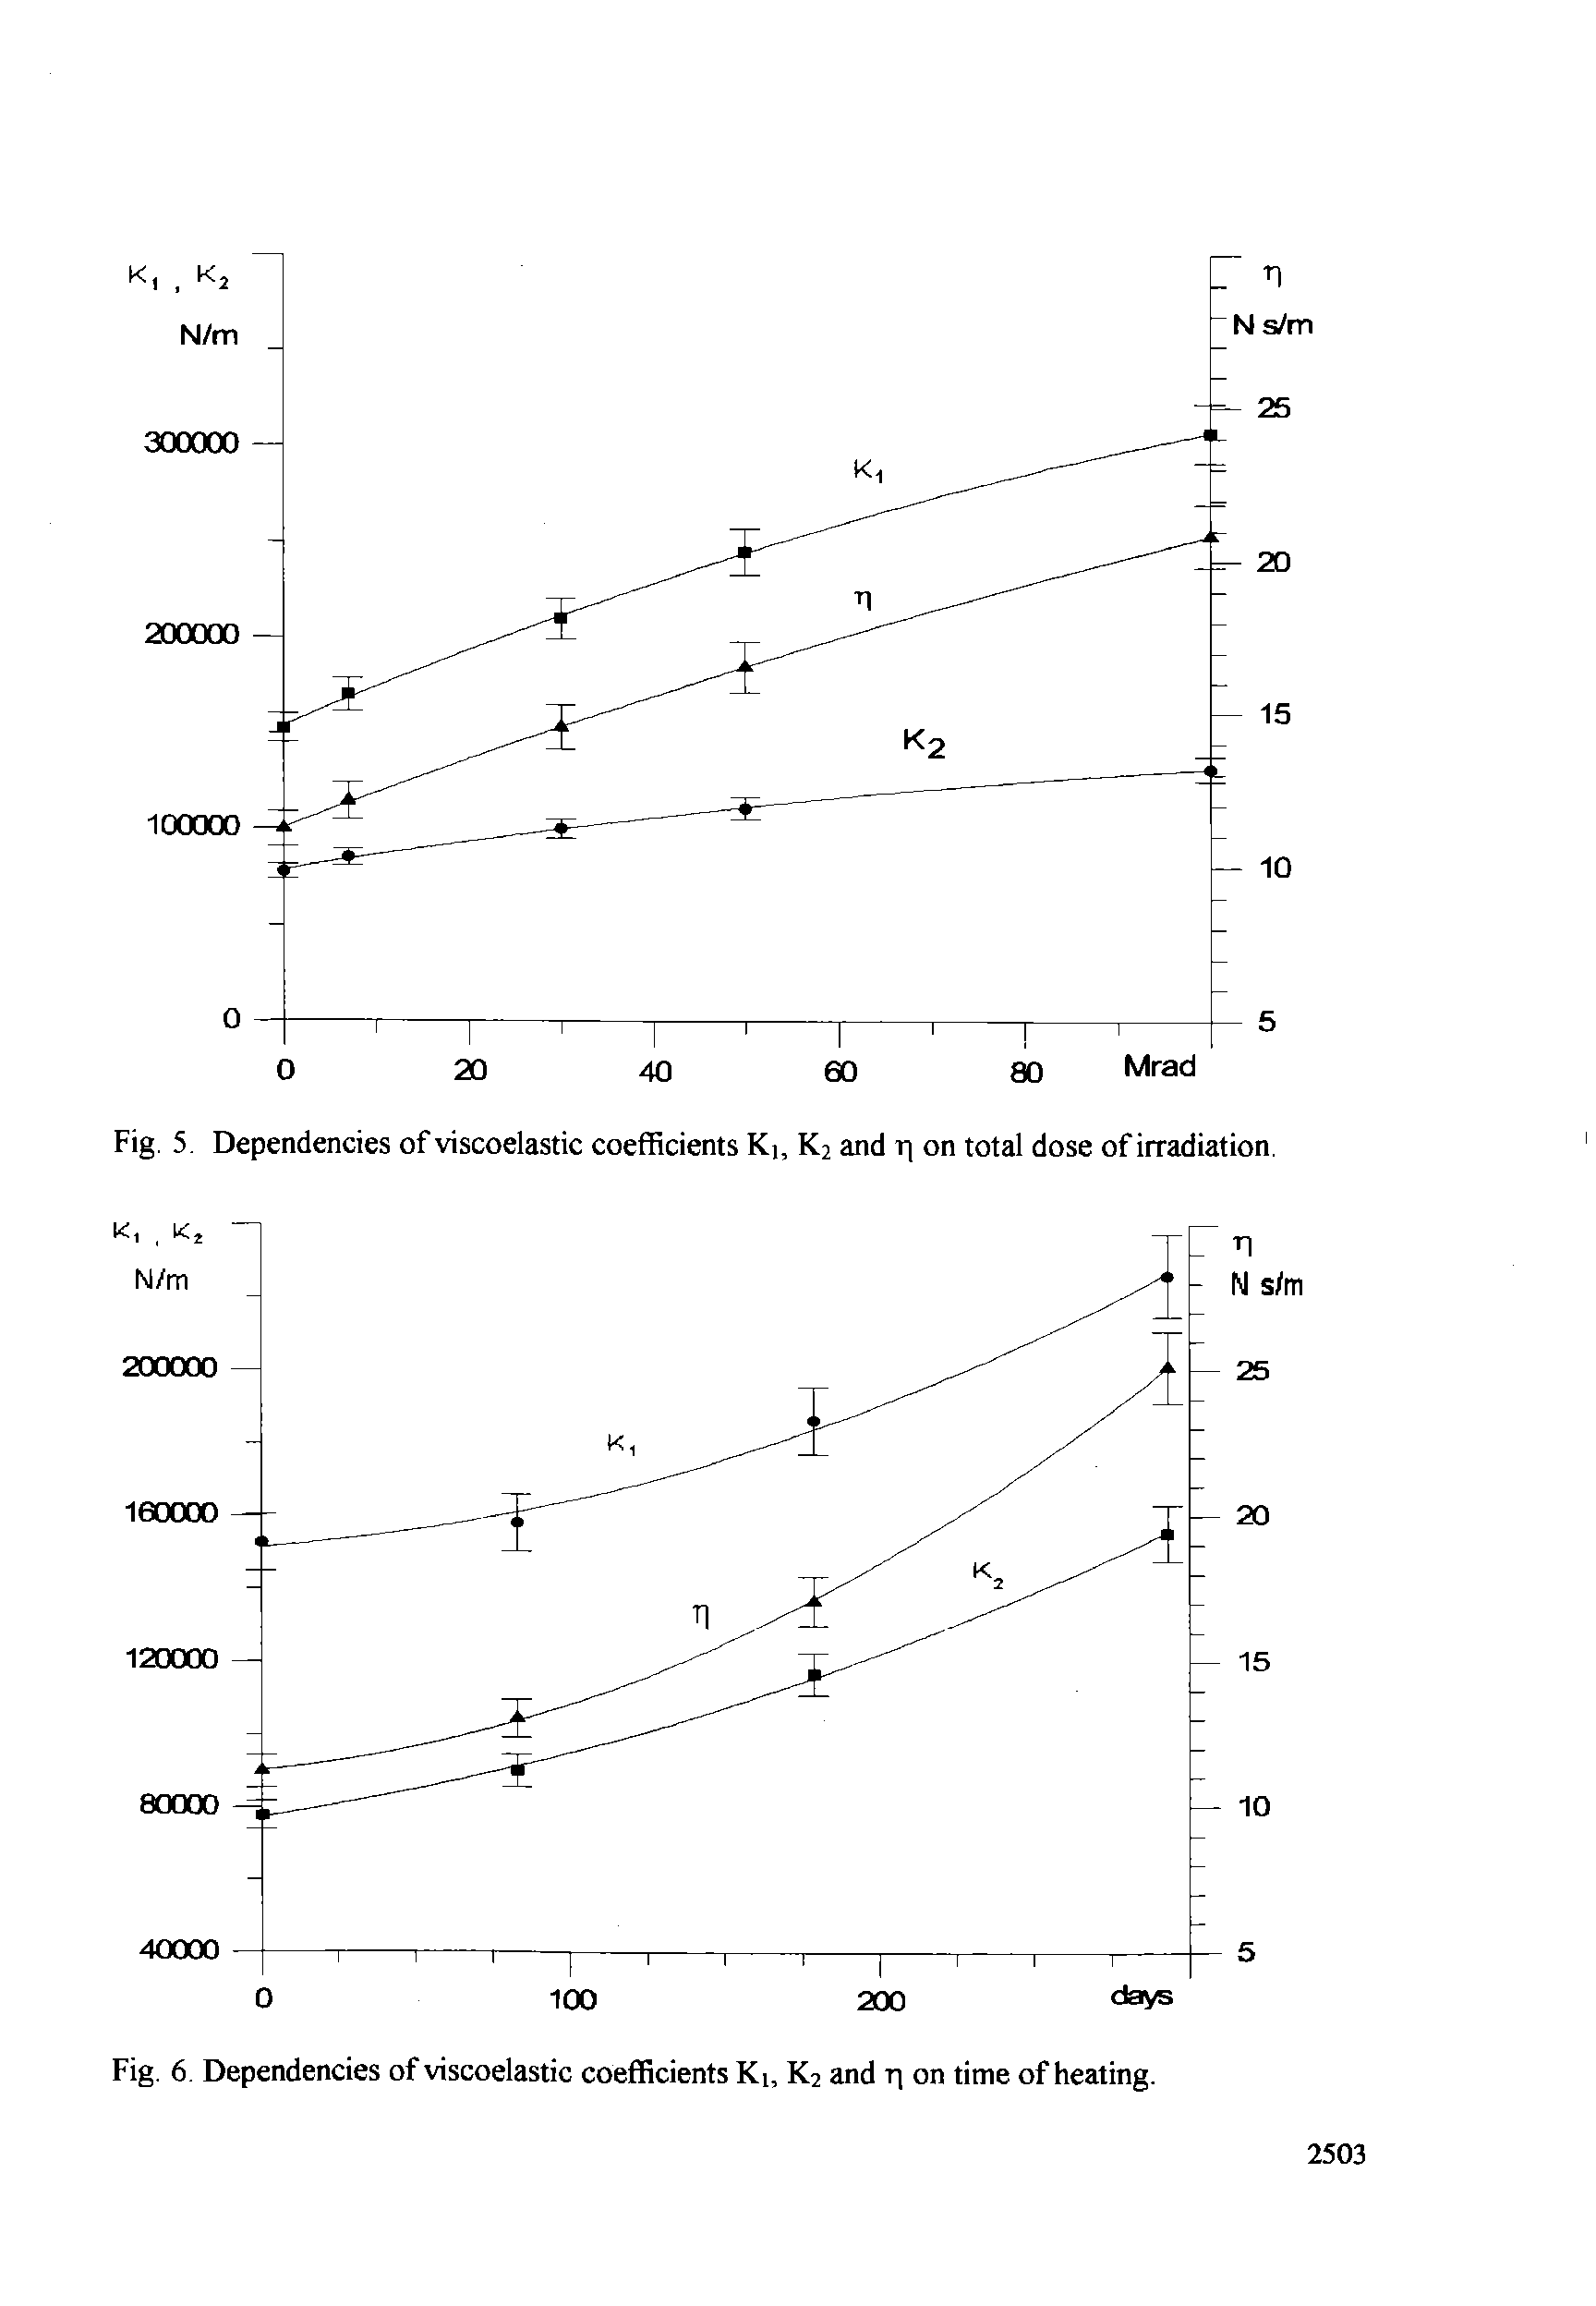 Fig. 5 Dependencies of viscoelastic coefficients Ki, K2 and rj on total dose of irradiation.